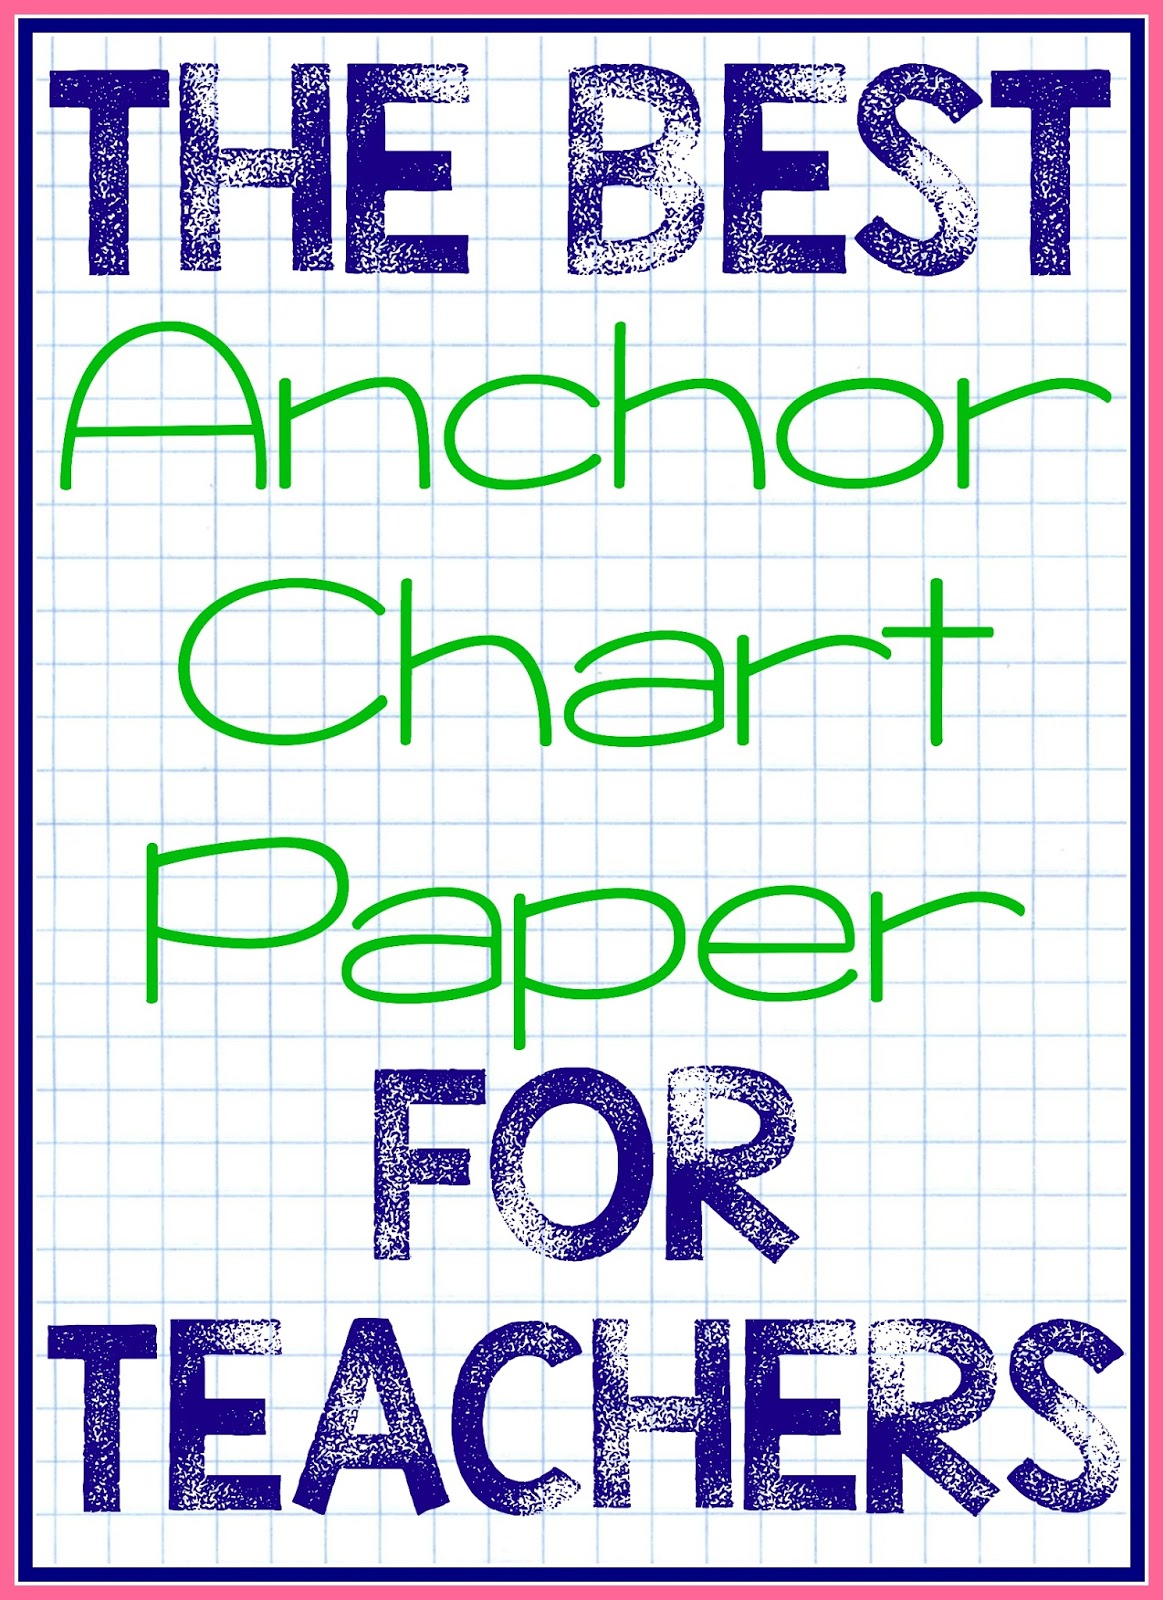 Anchor Chart Paper For Teachers